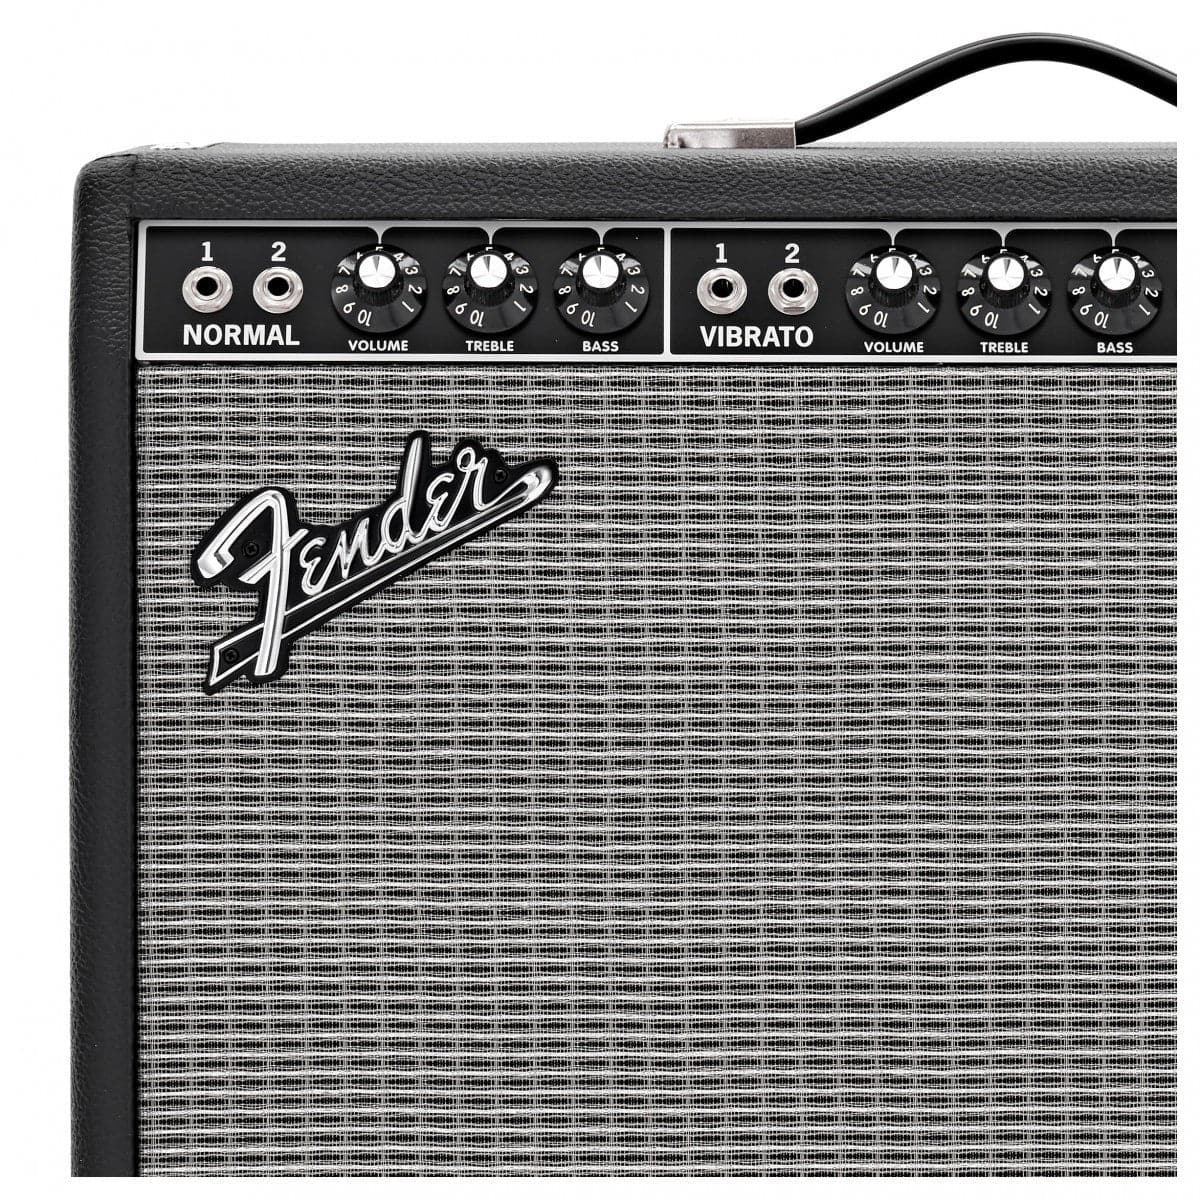 Fender Tone Master Deluxe Reverb Amp (2274106000)